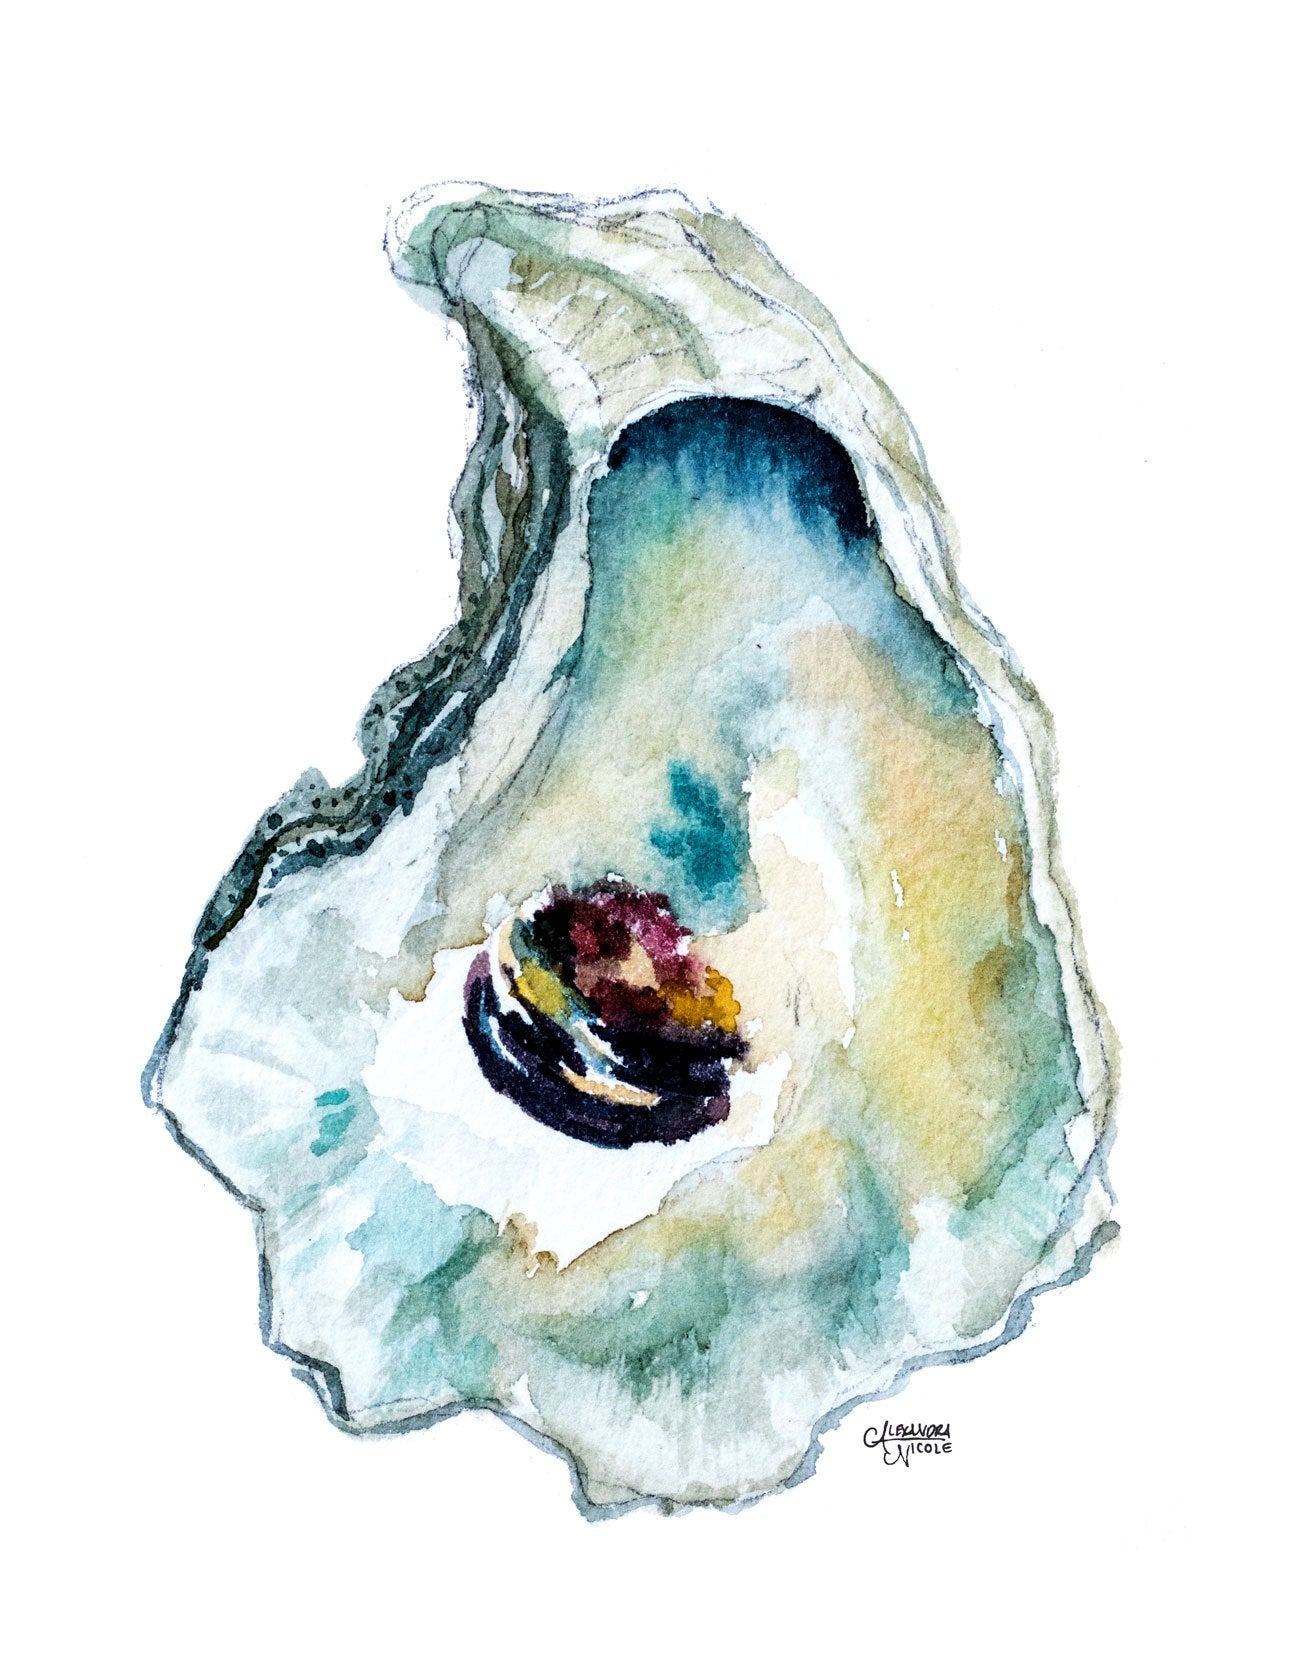 Oyster Shell Watercolor Trio Print Set - ArtByAlexandraNicole